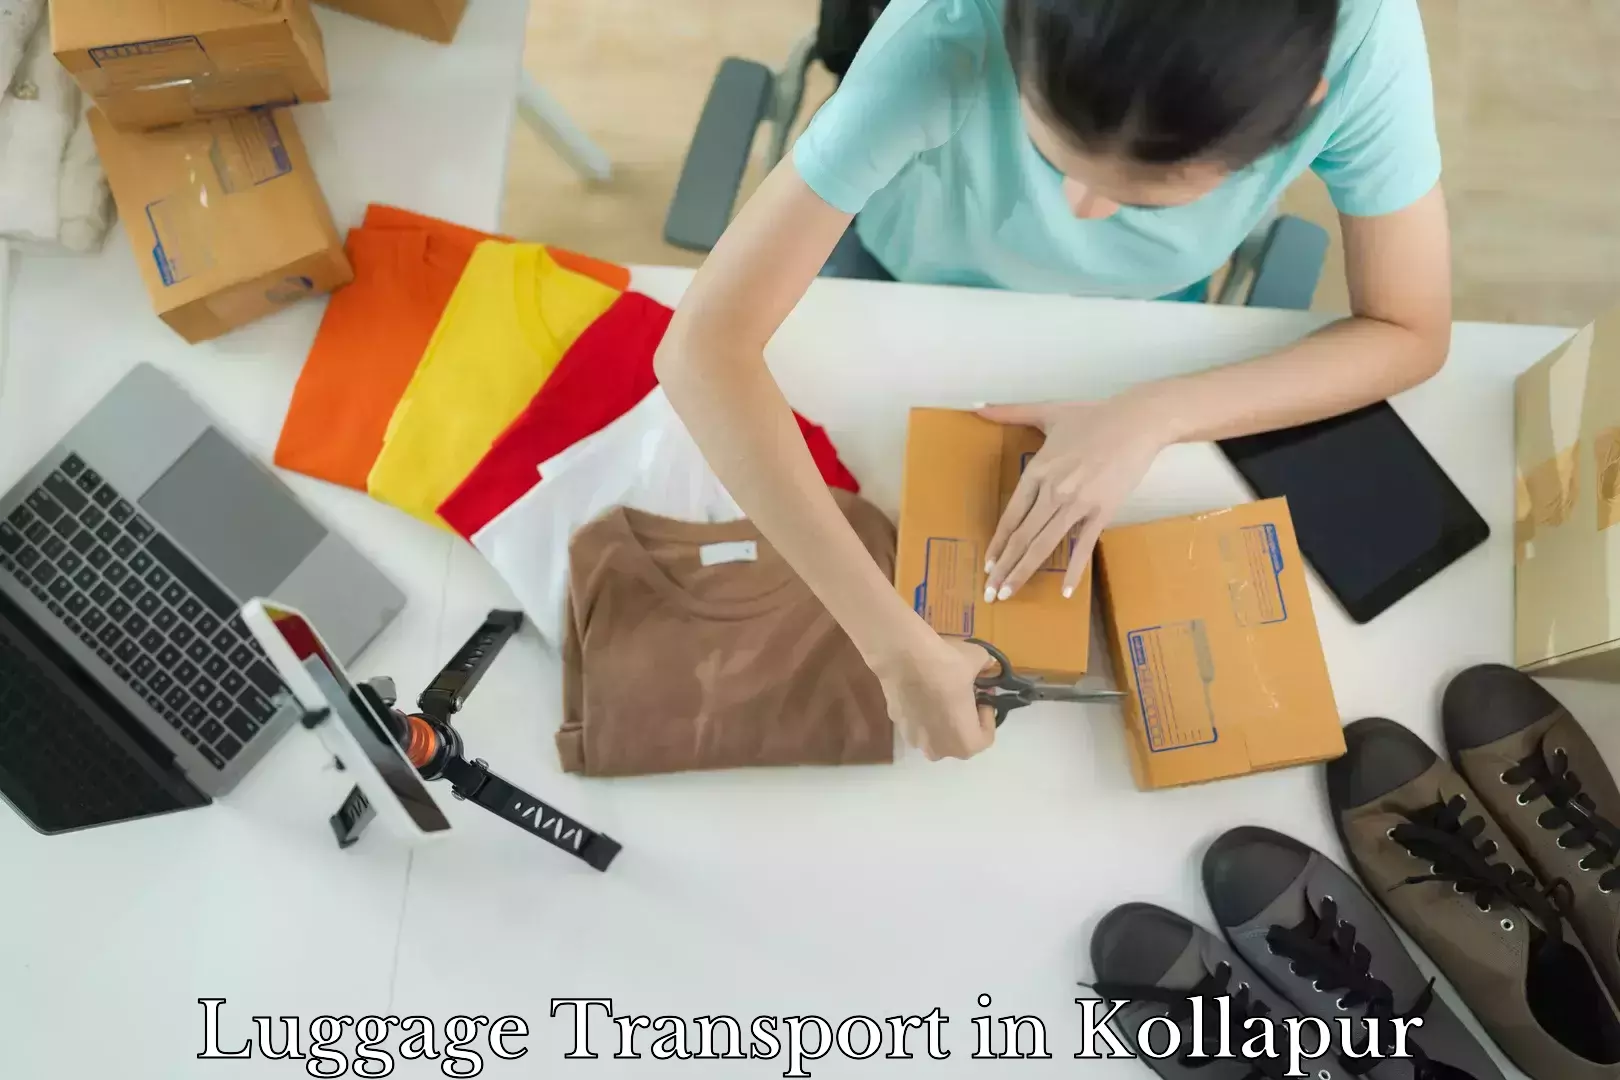 Simplified luggage transport in Kollapur